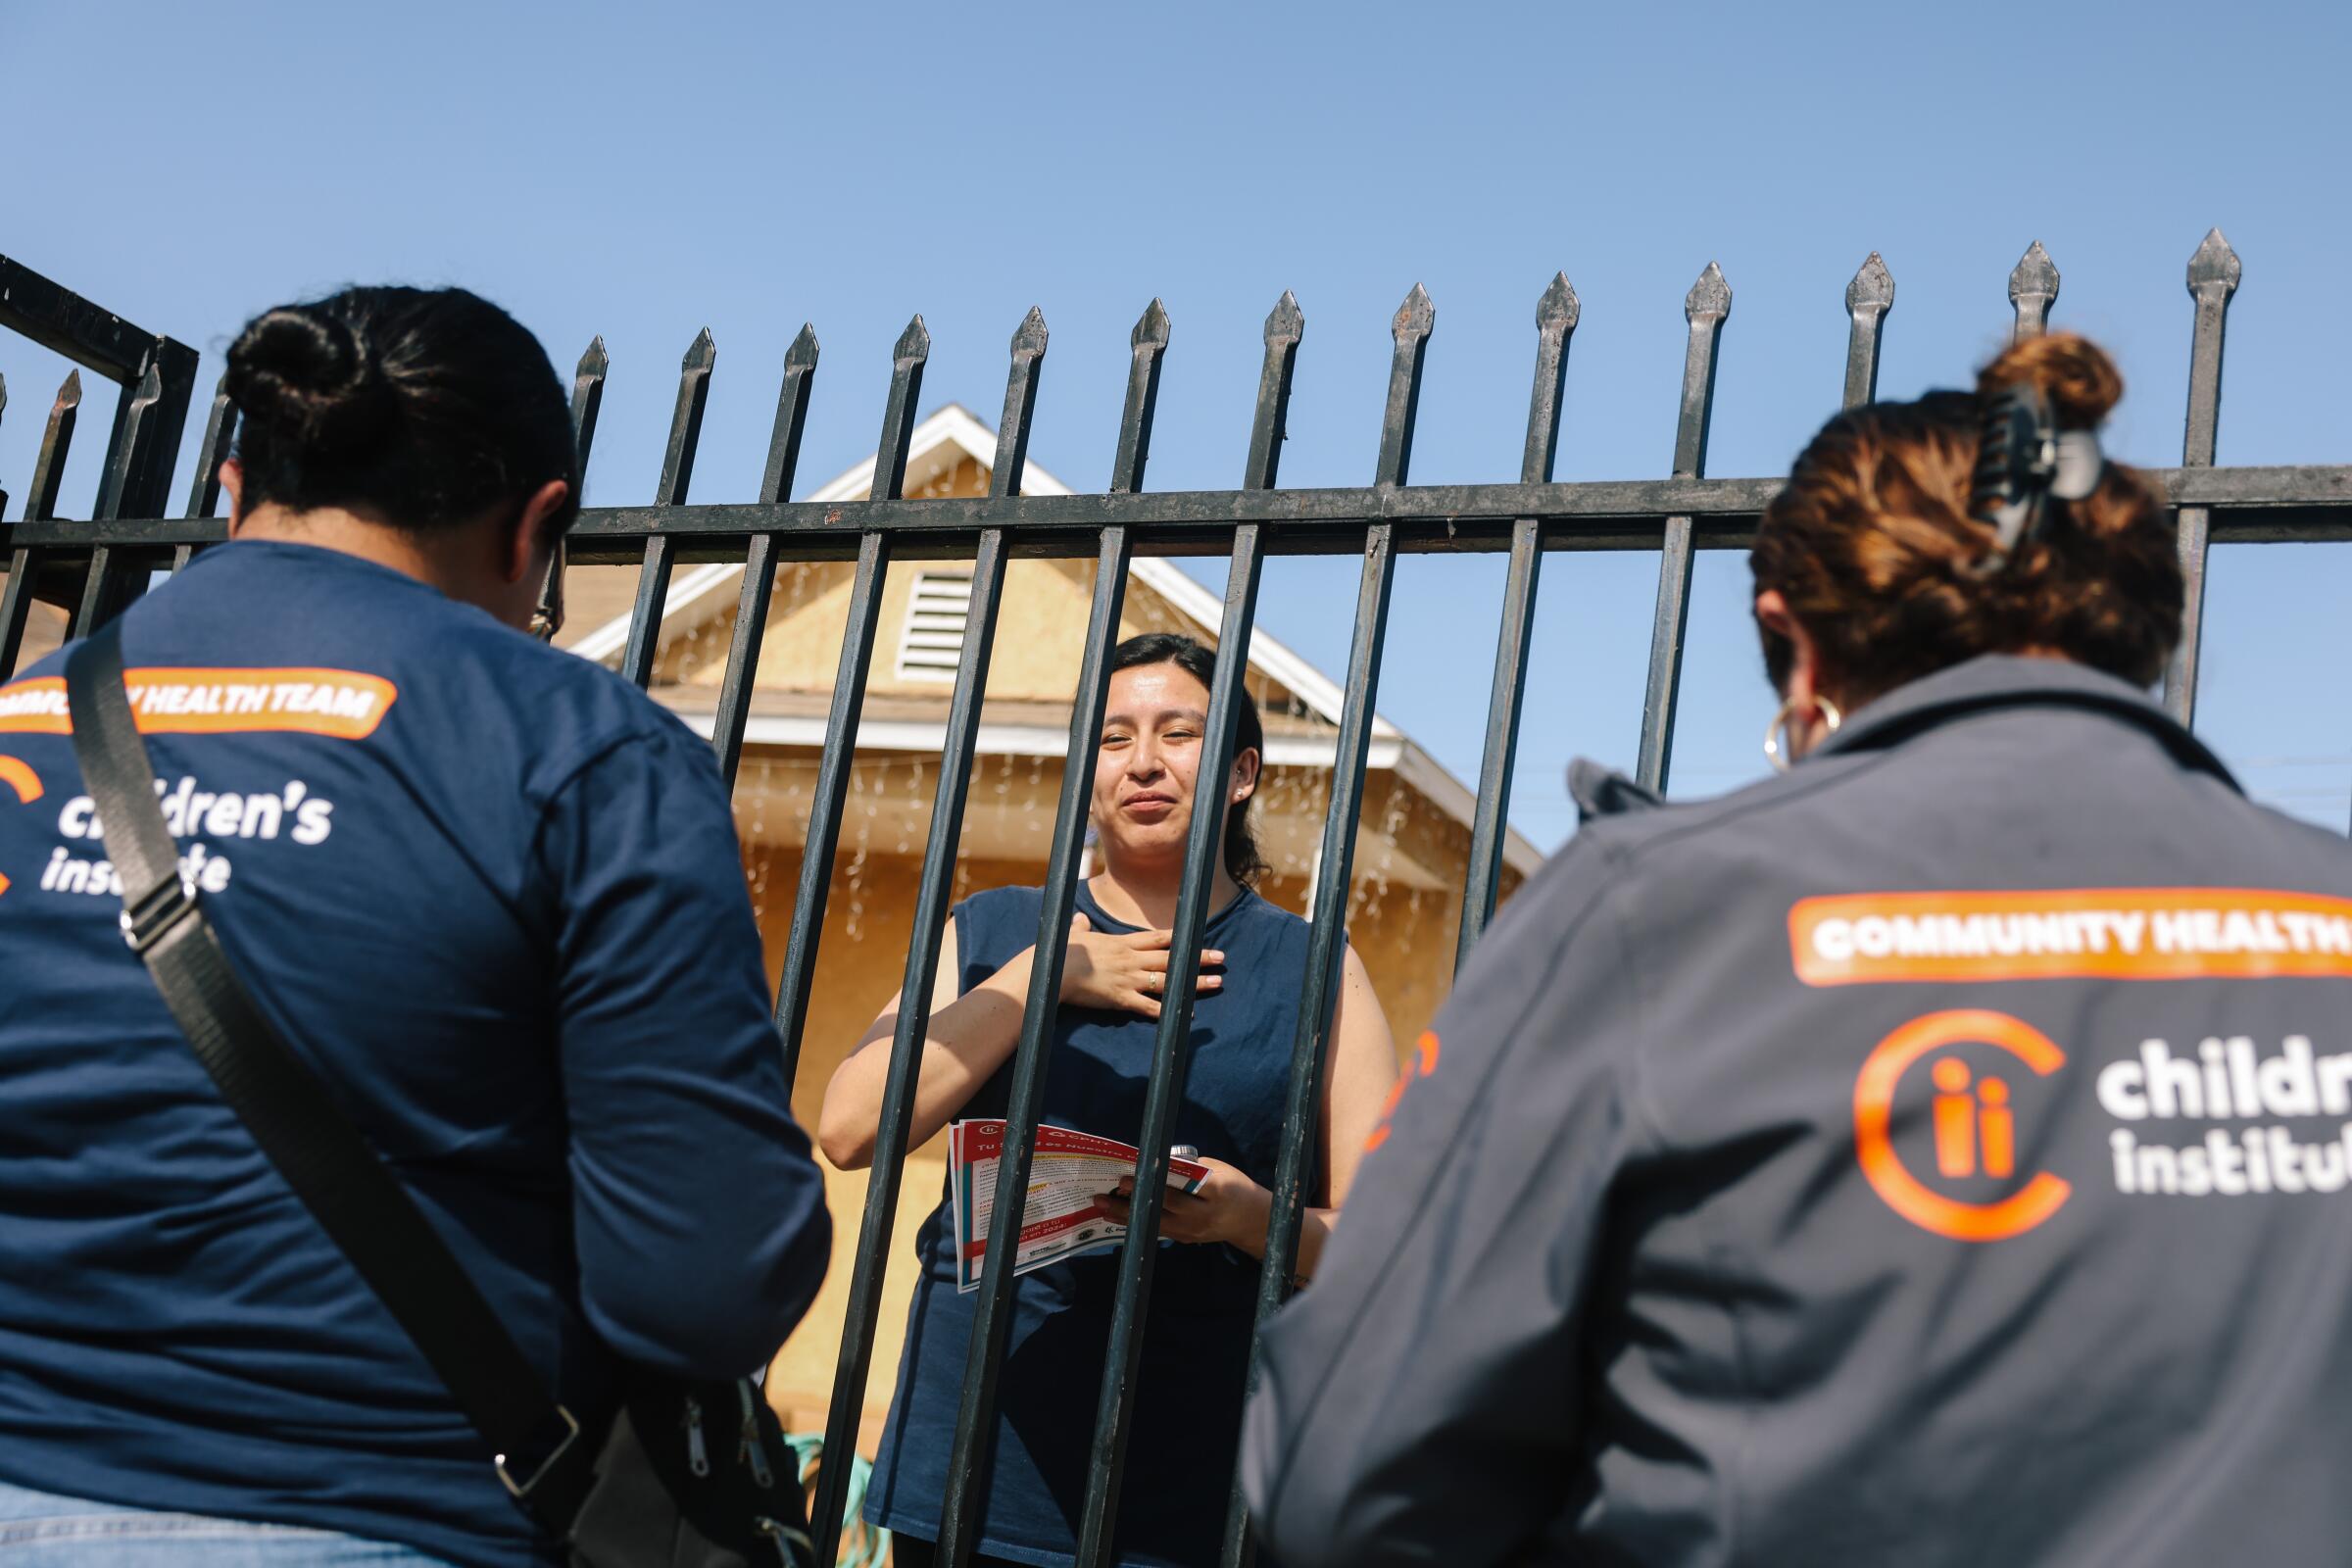 Maria Trujillo and Elizabeth Calvillo with Children's Institute speak with Brenda Montes, 26, through a fence in Watts.